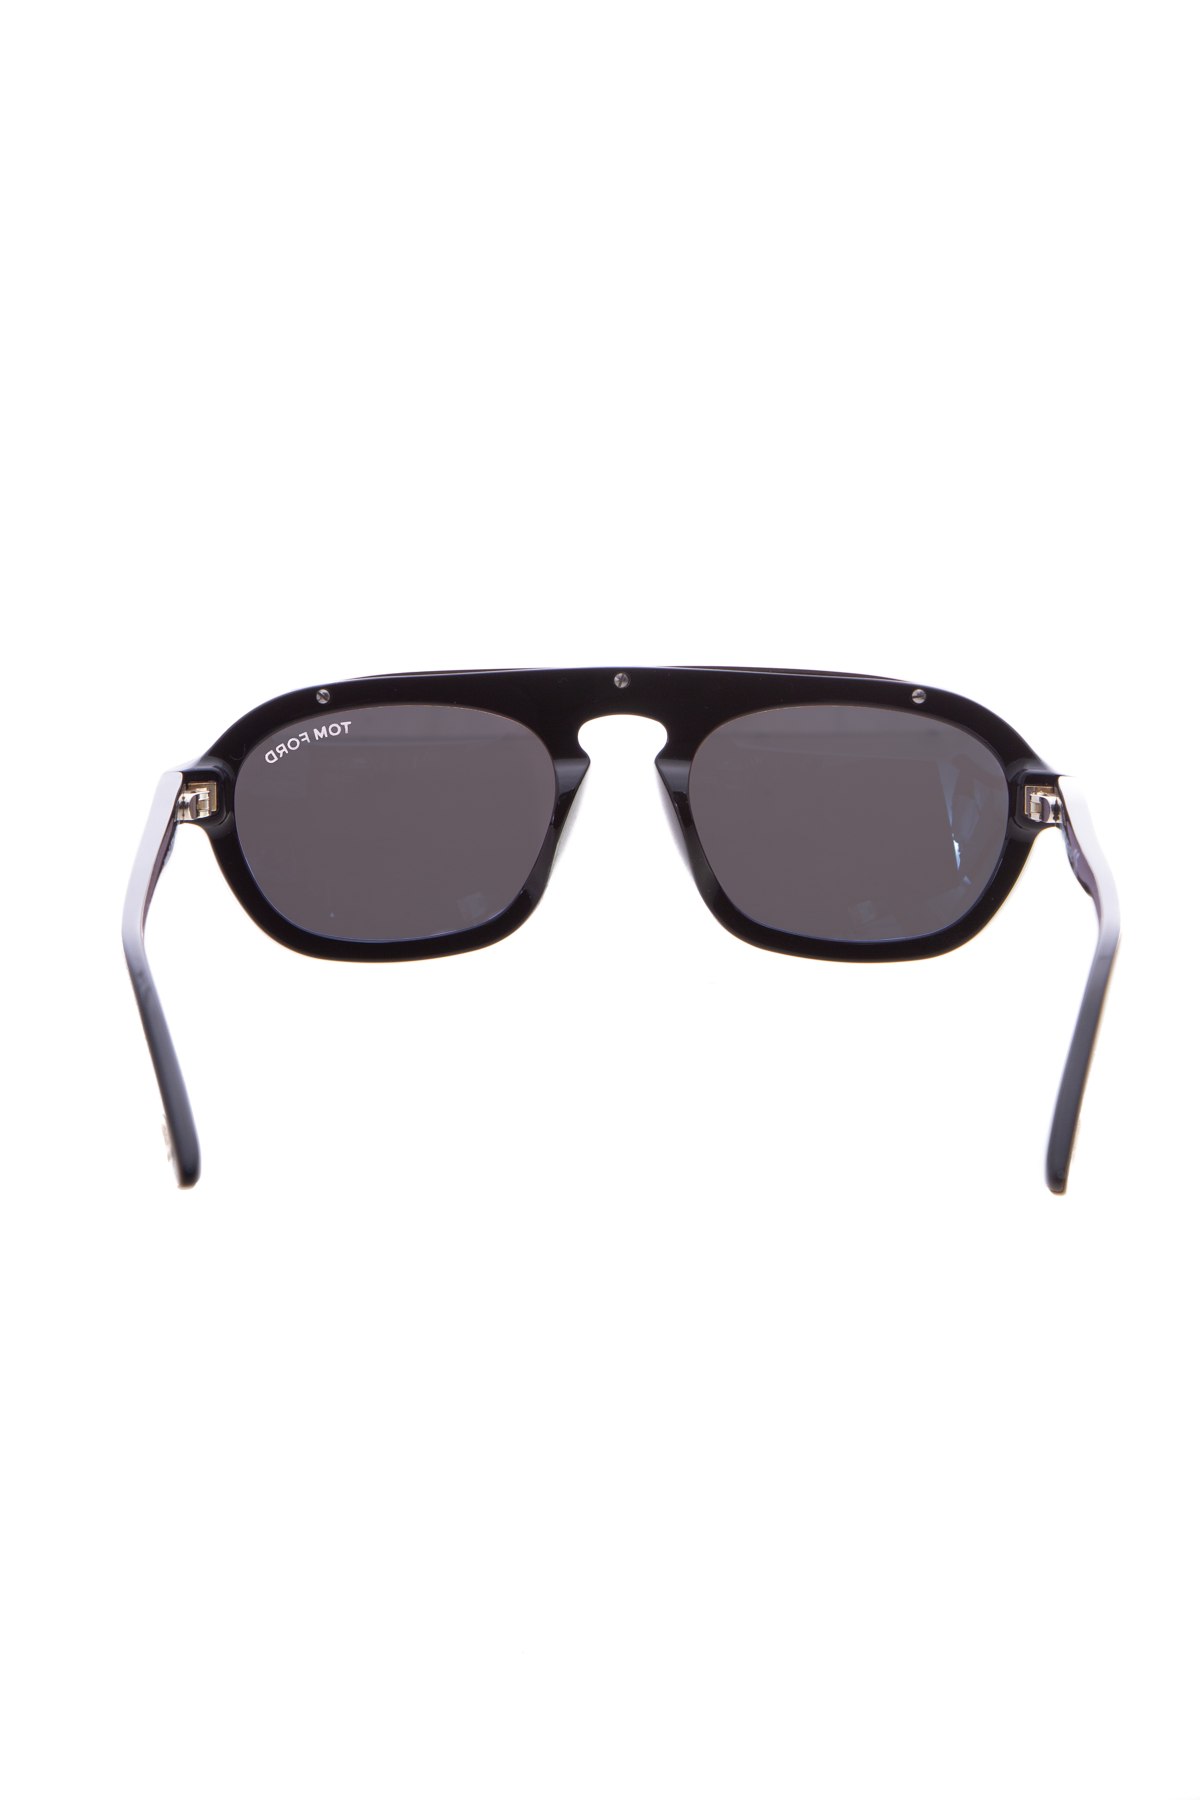 Tom Ford FT0862 Garrett sunglasses | SelectSpecs USA